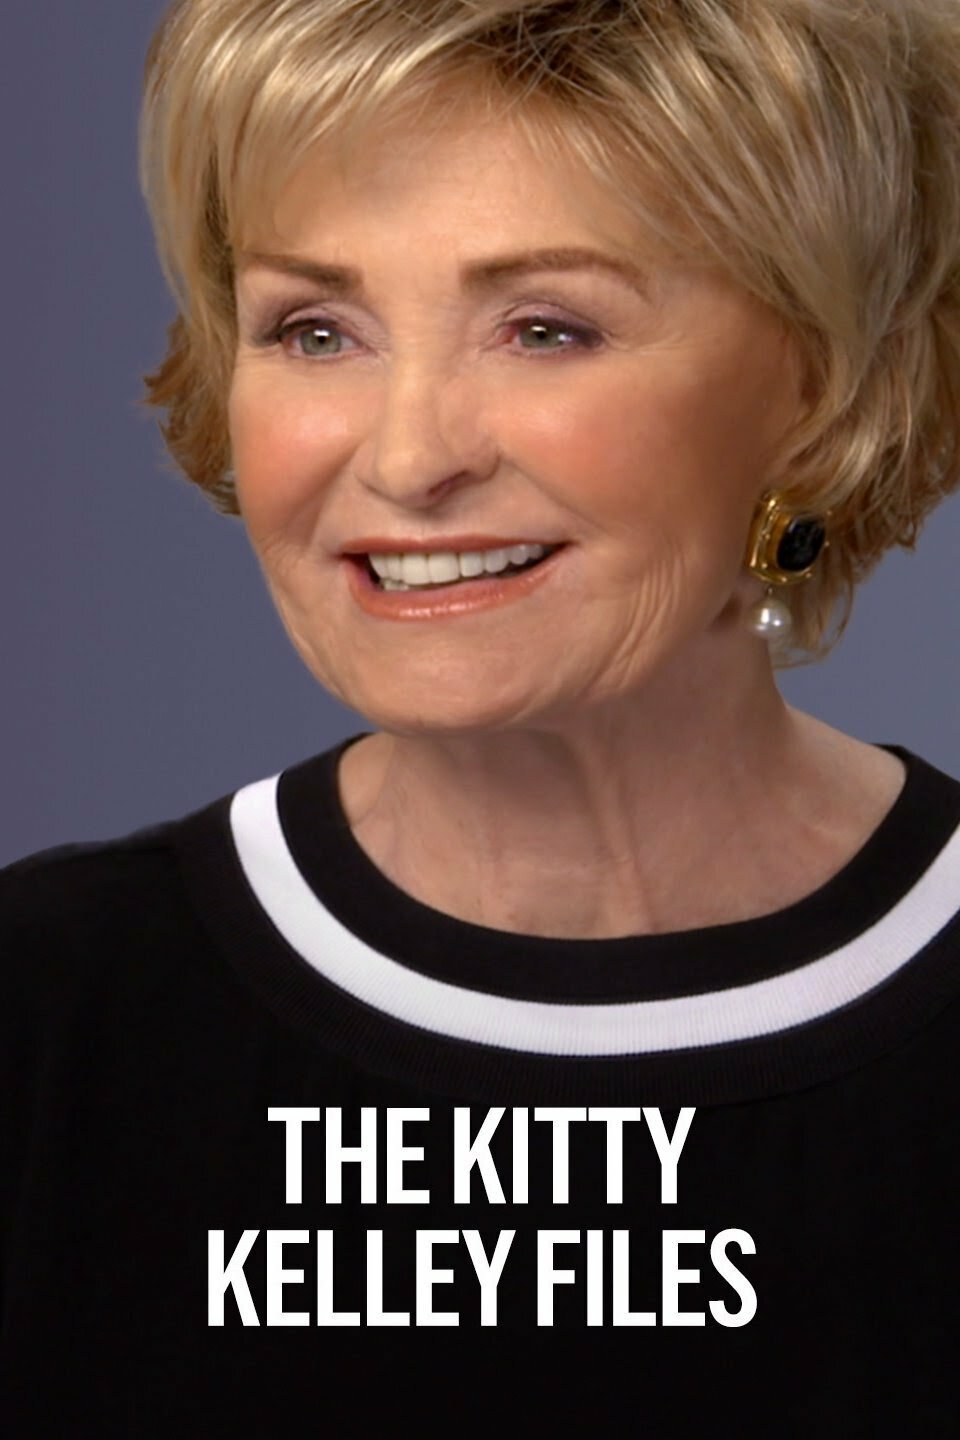 The Kitty Kelley Files ne zaman